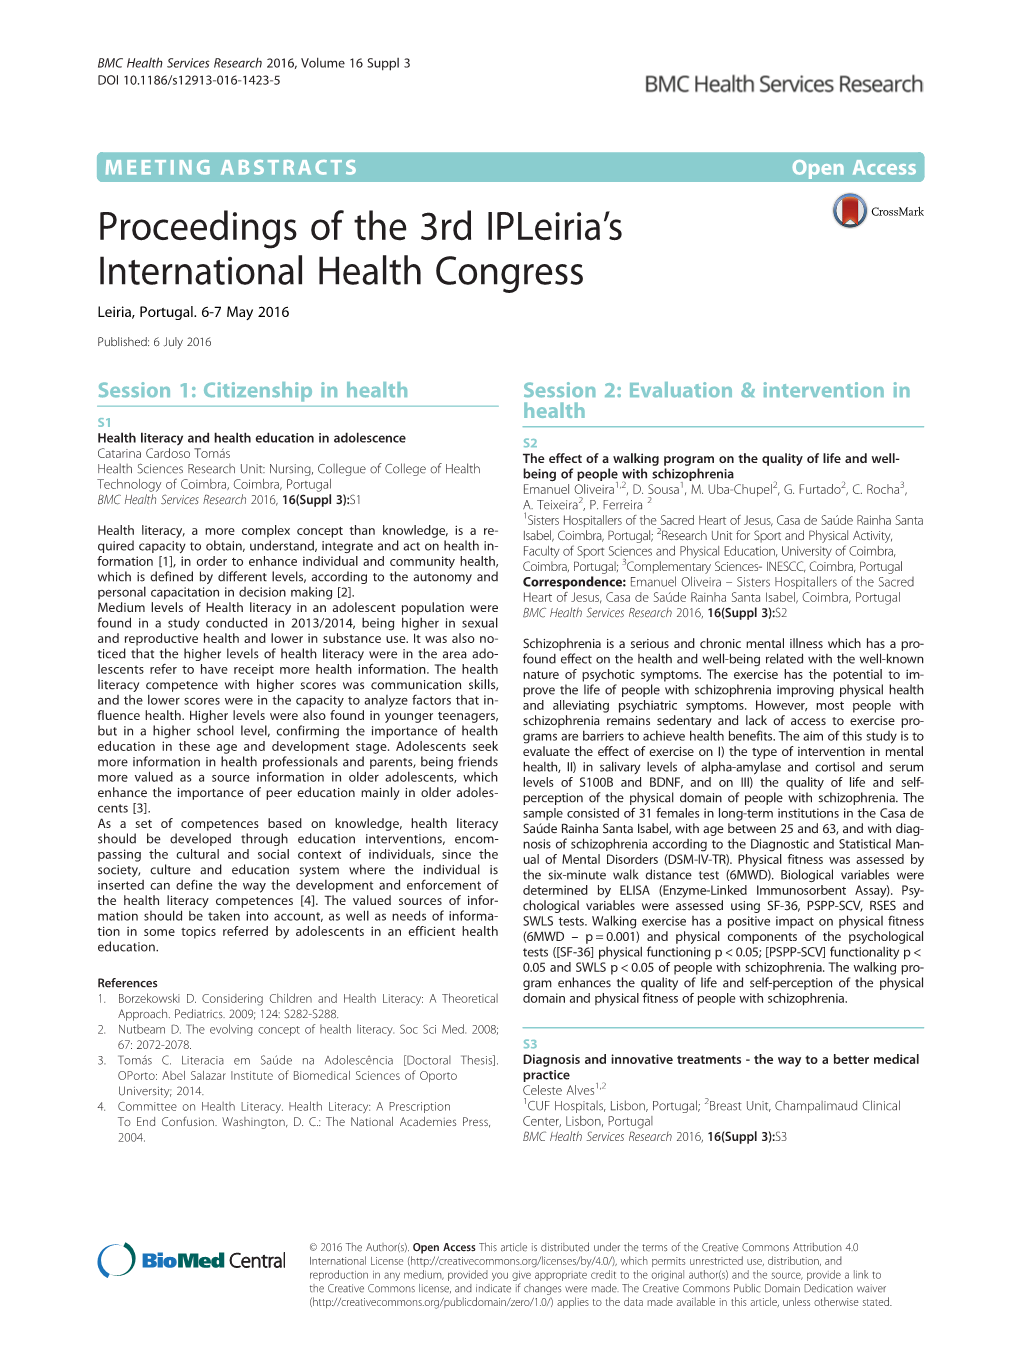 Proceedings of the 3Rd Ipleiria's International Health Congress